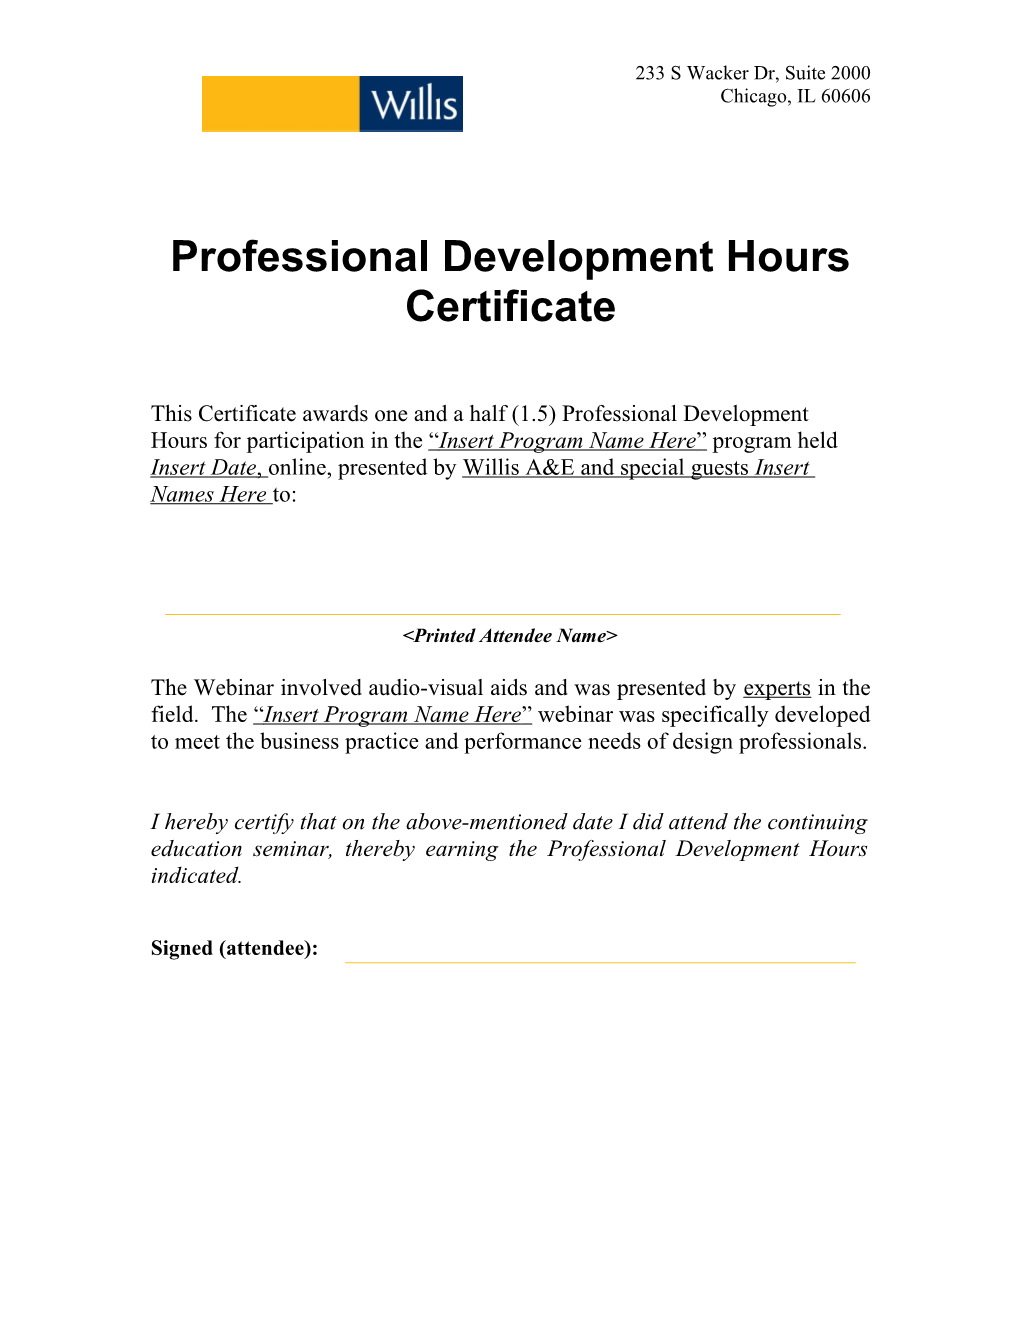 Professional Development Hours Certificate